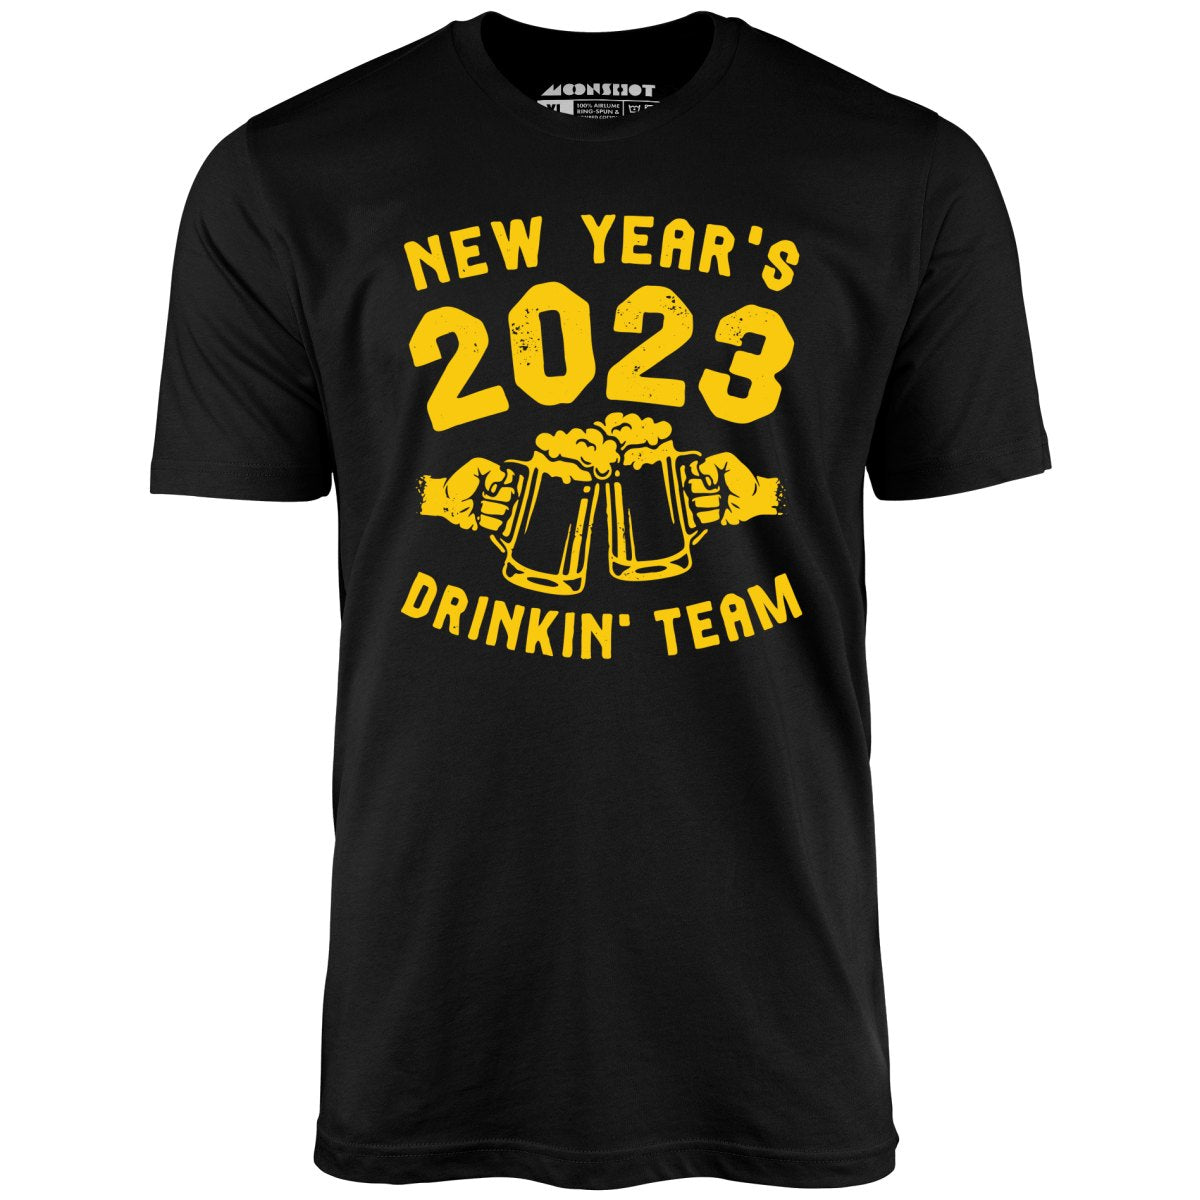 New Year's 2023 Drinkin' Team - Unisex T-Shirt